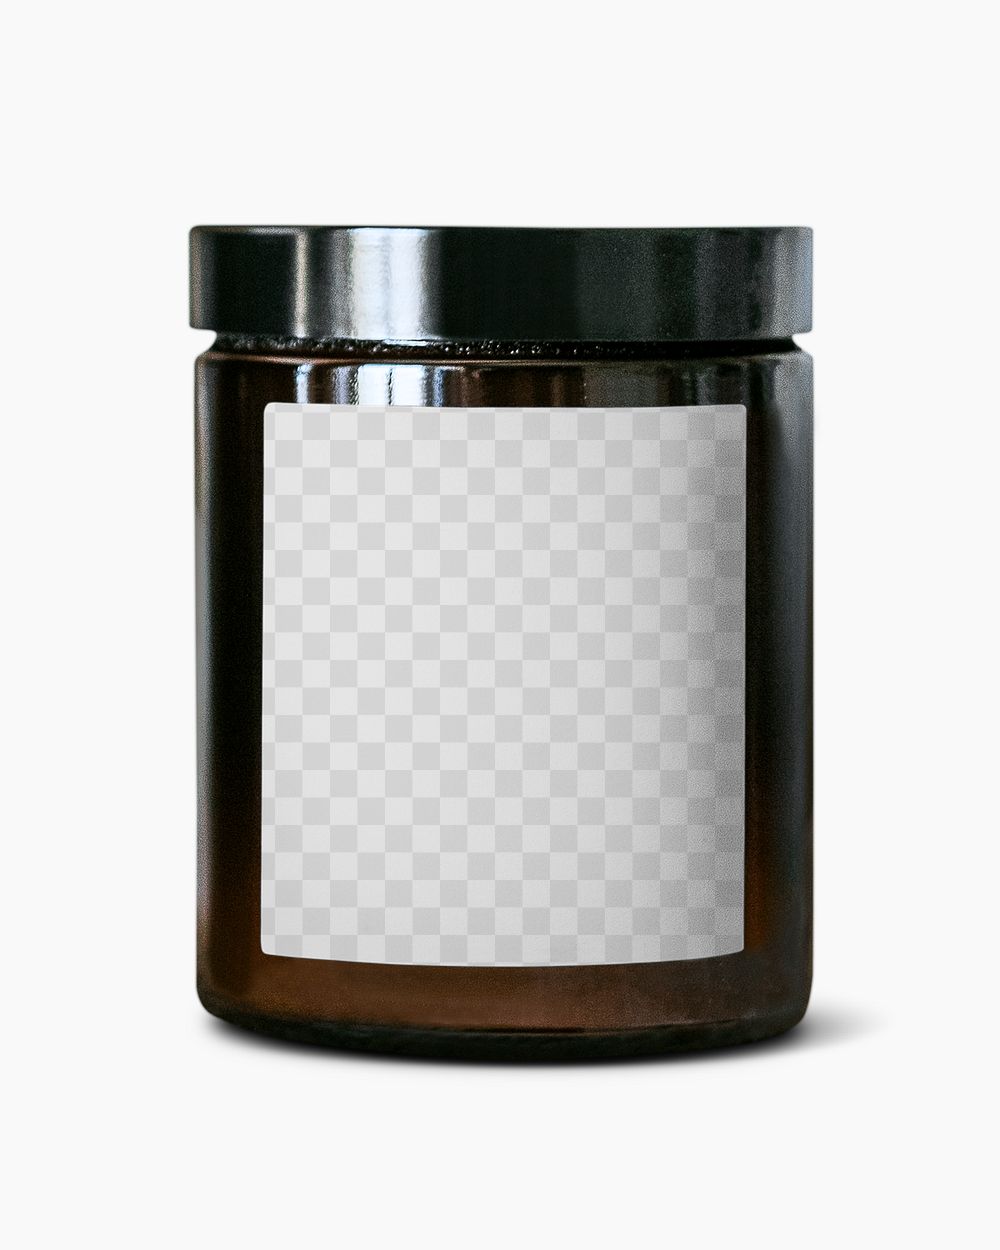 Beauty product jar png mockup minimal style